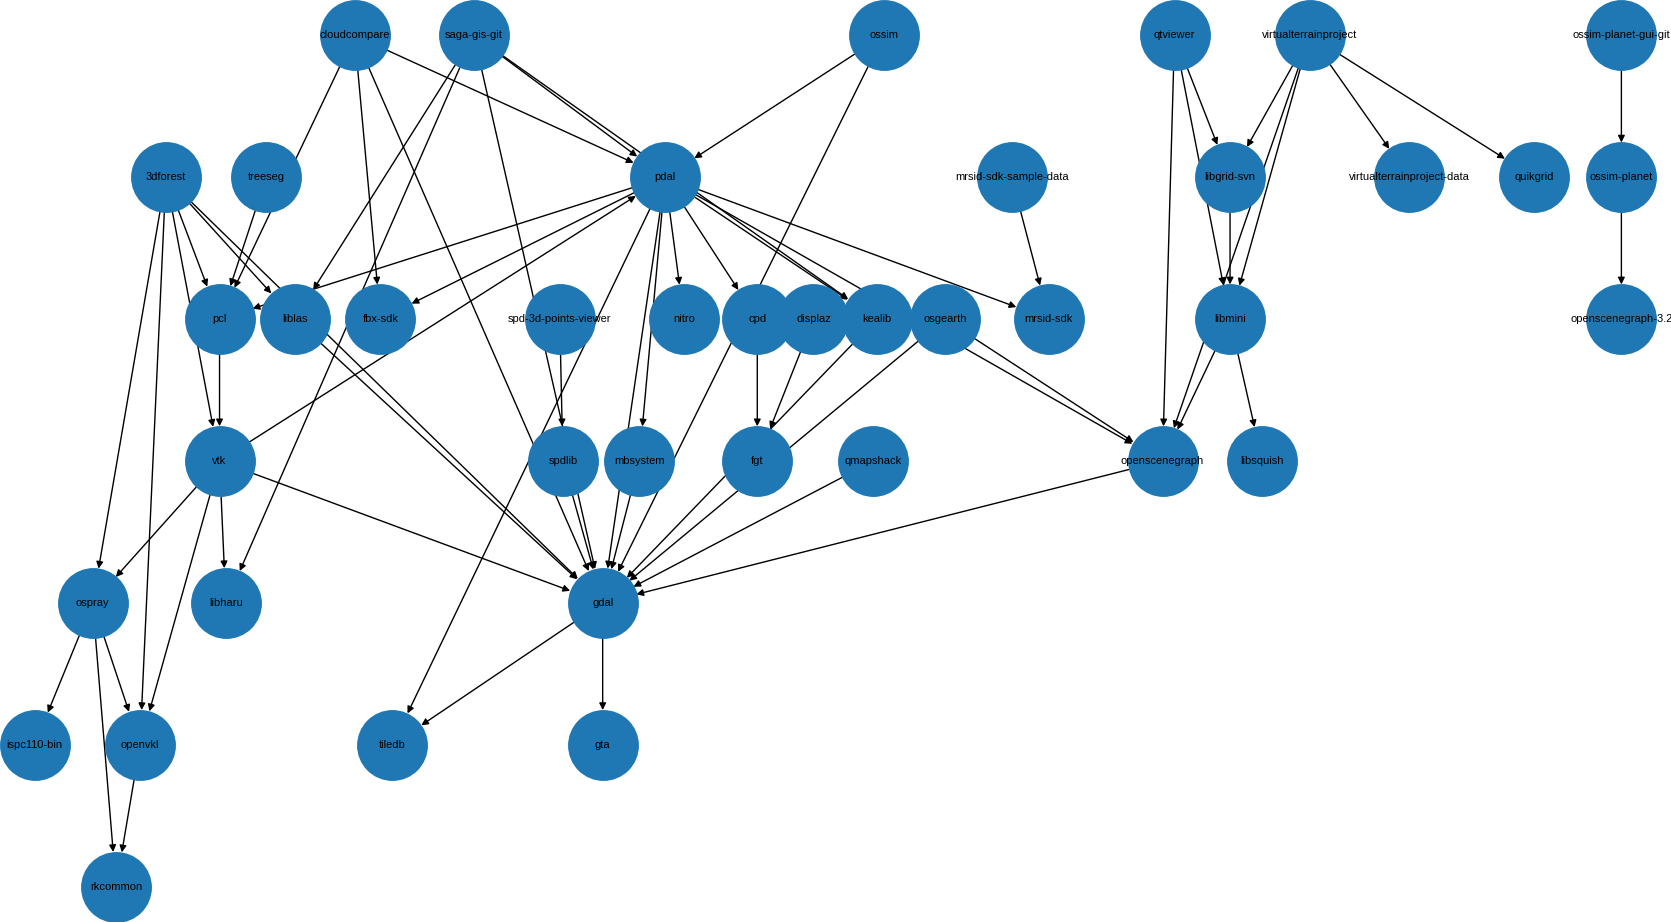 archlinux-pkgbuilds dependency tree visualization